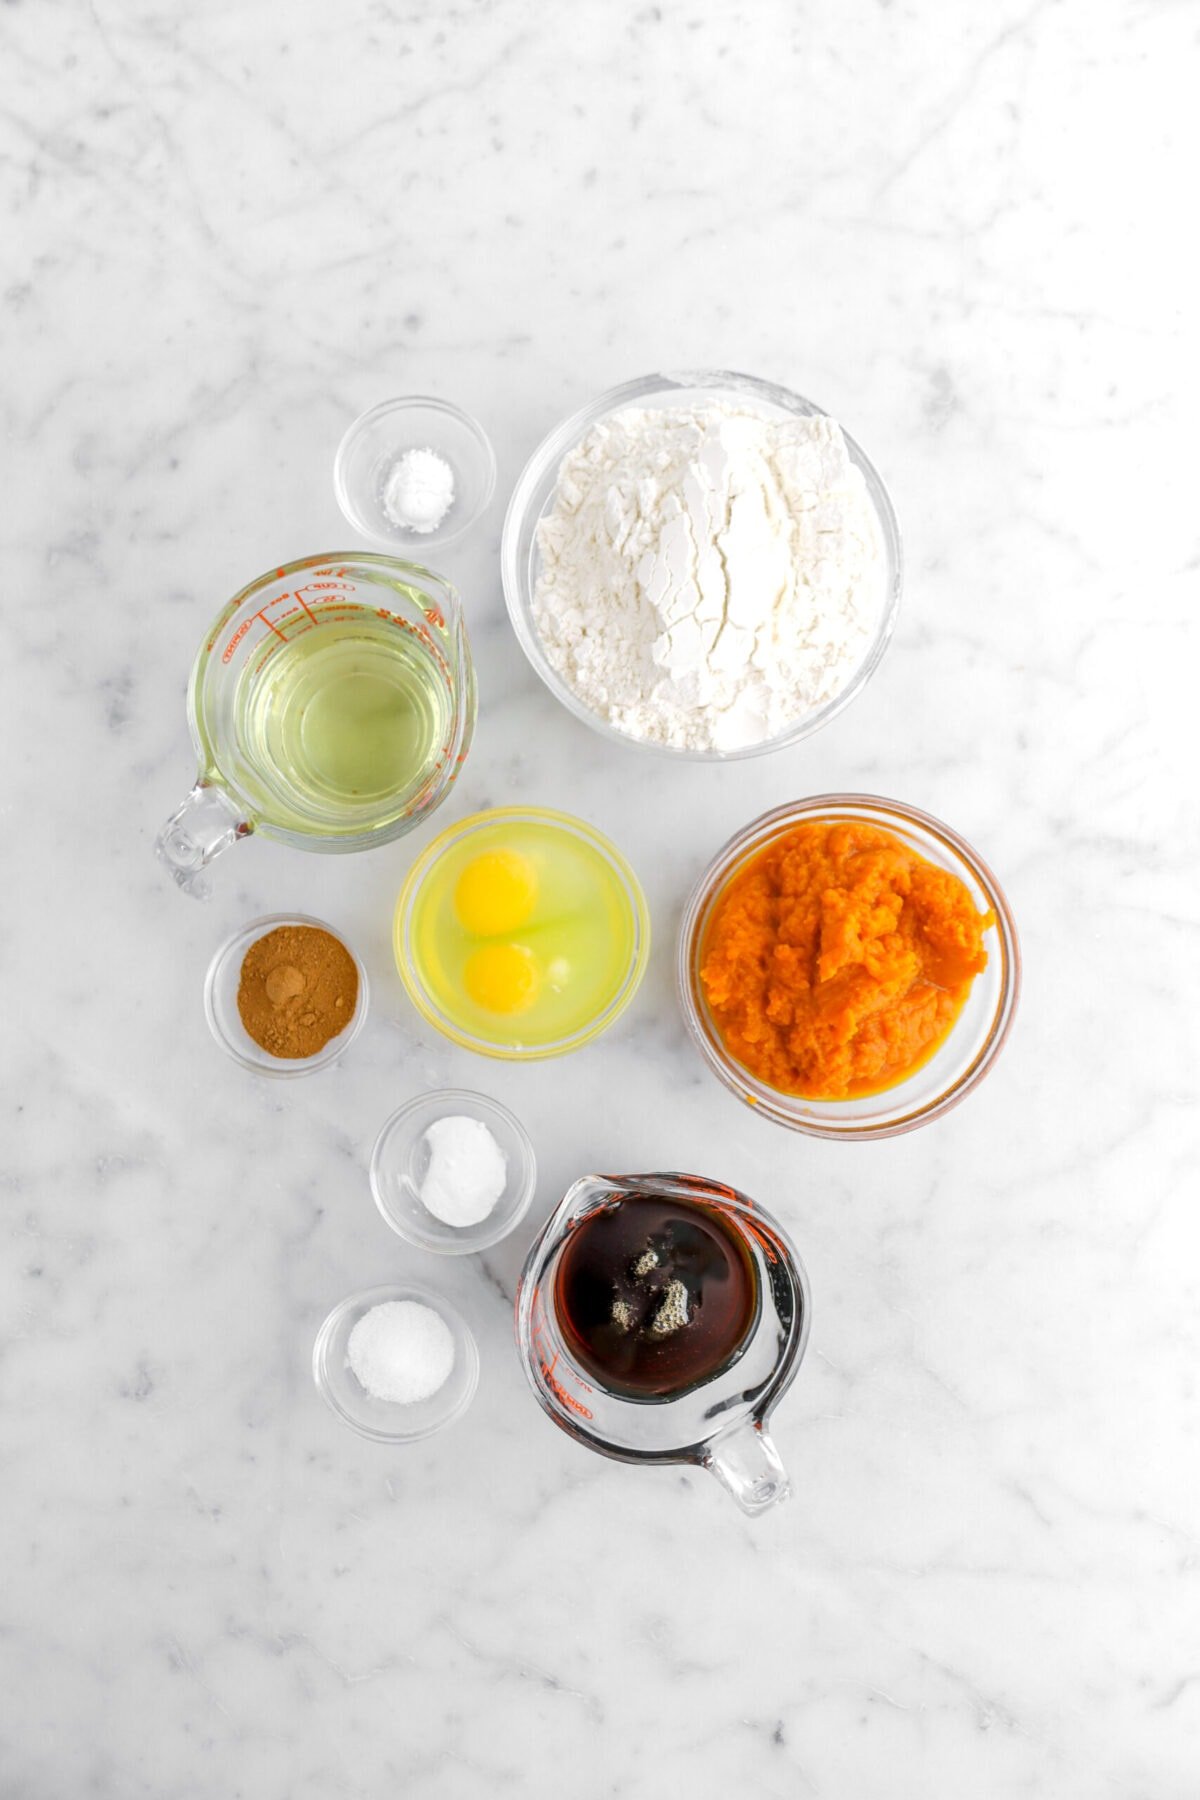 baking powder, flour, oil, eggs, spice, baking soda, salt, maple syrup, and pumpkin purée on marble surface.